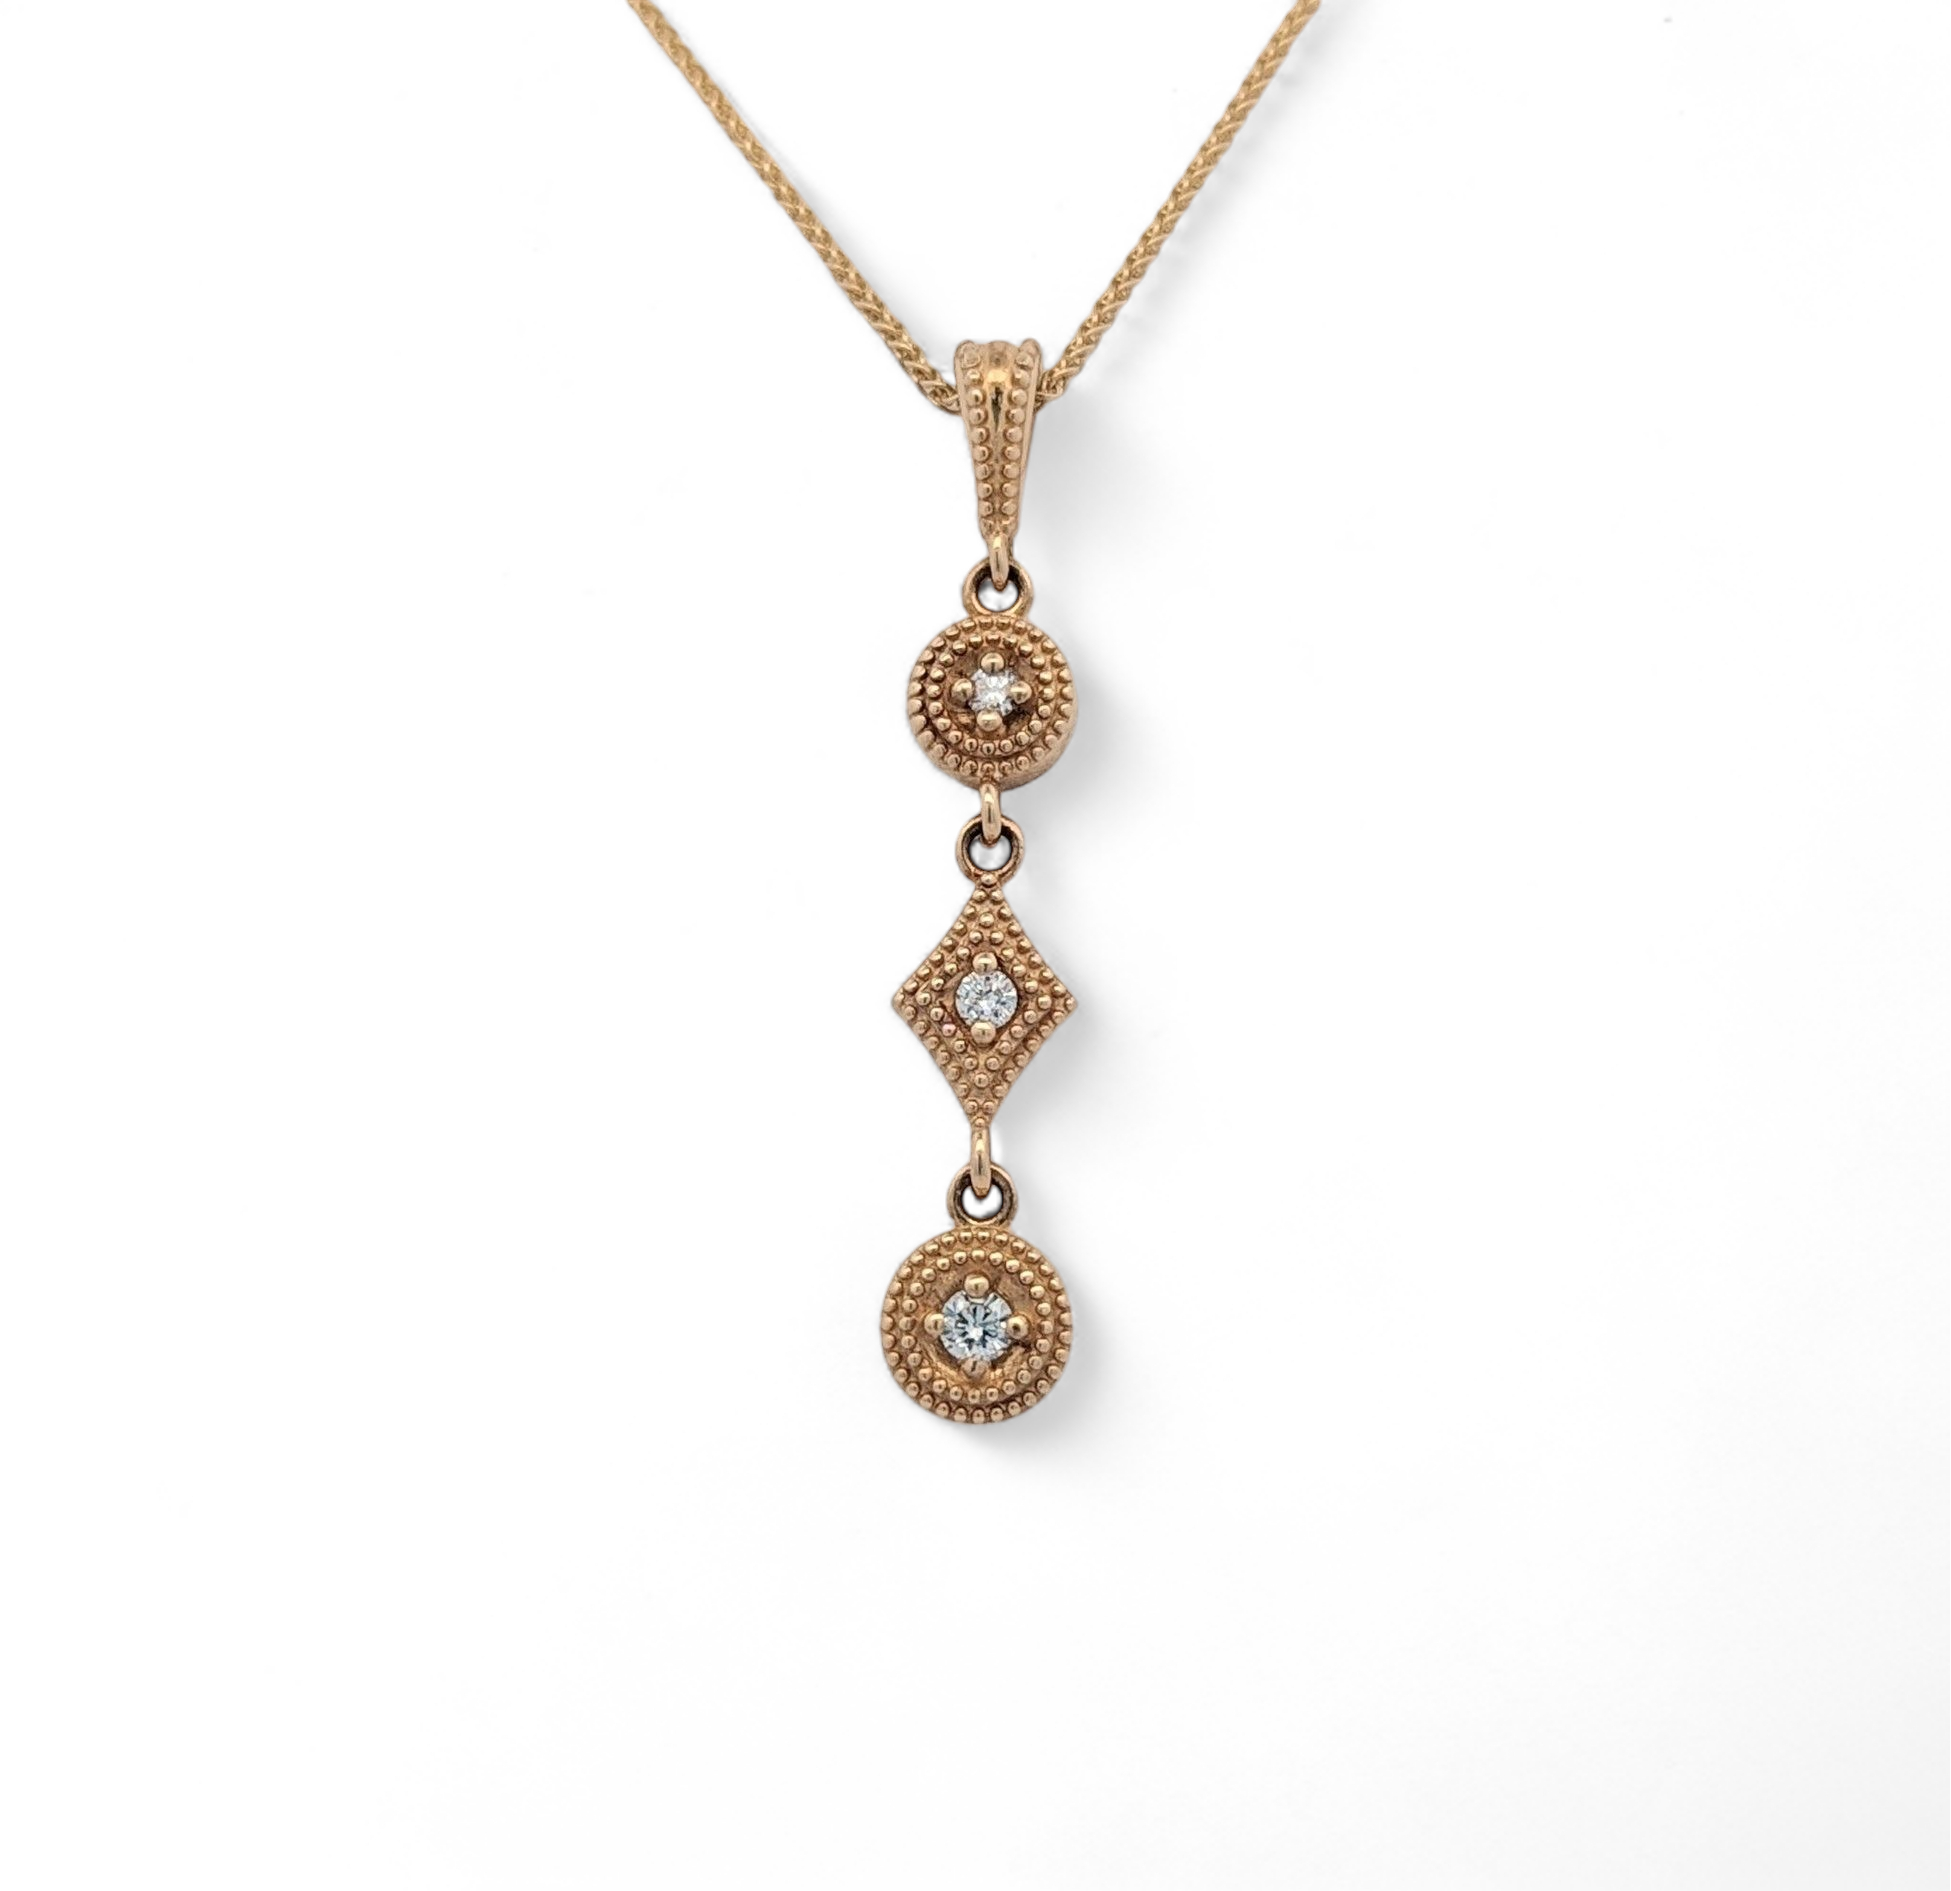 Vivianna Diamond Necklace in 14k Yellow Gold